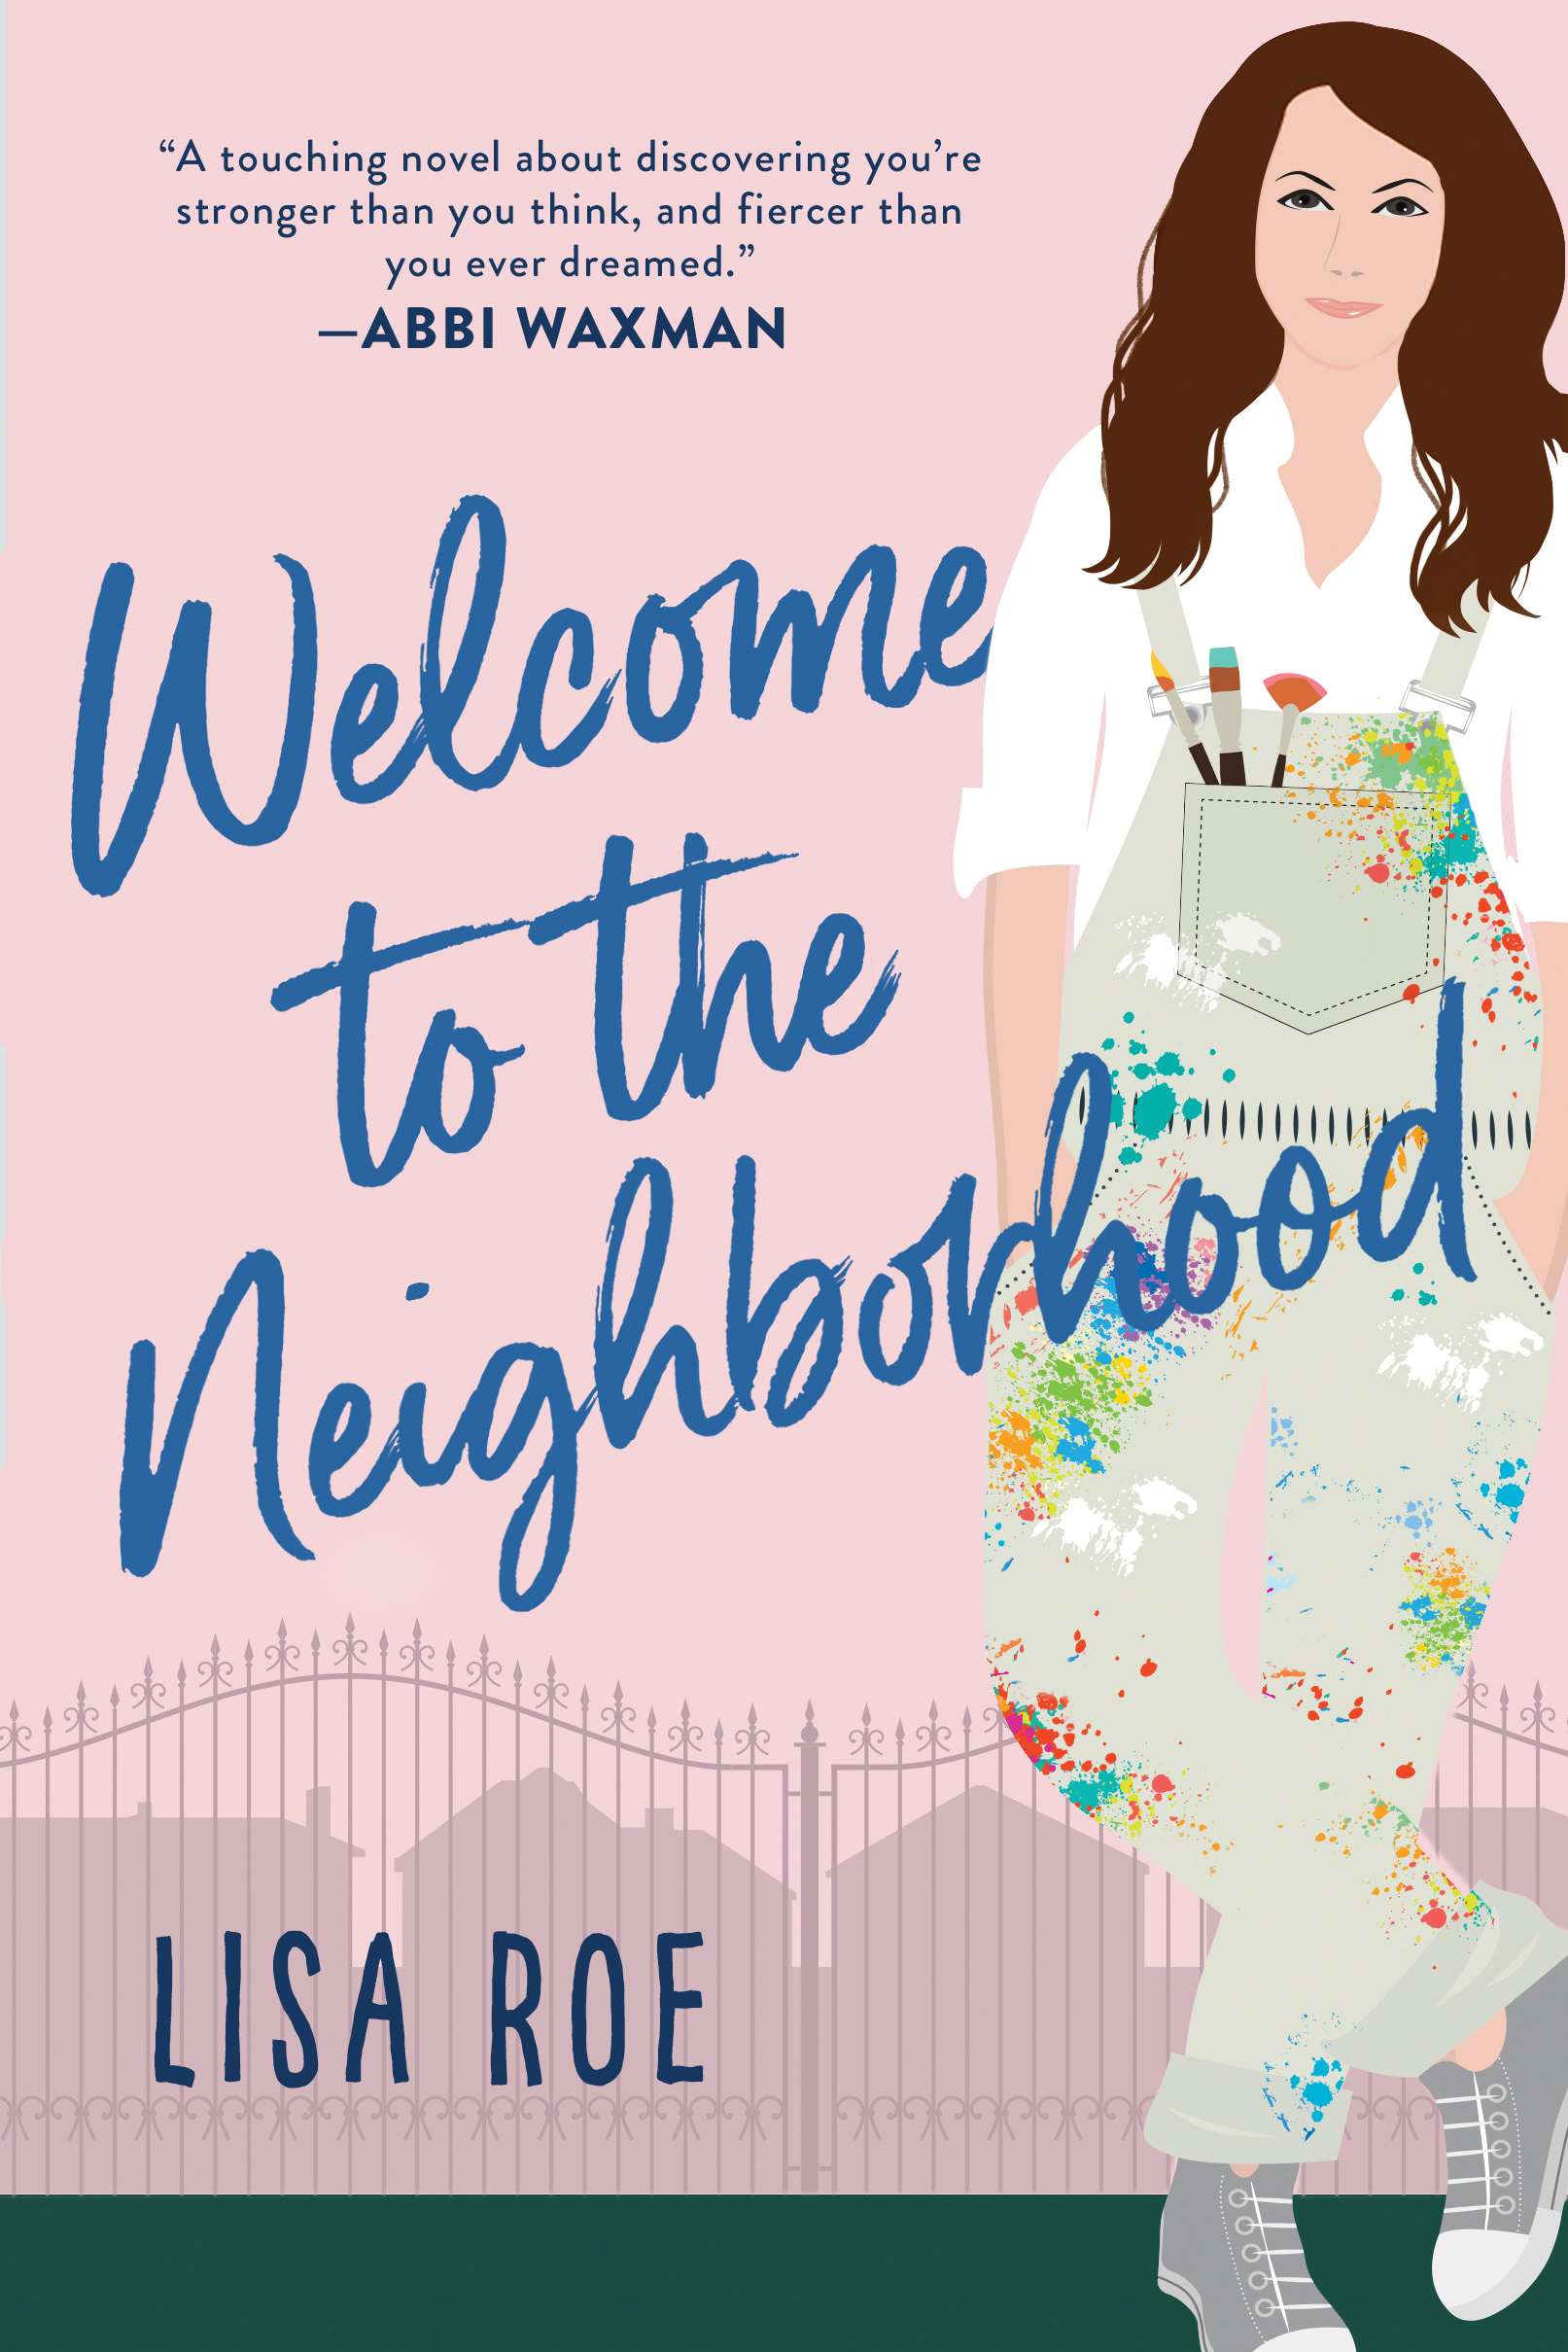 Welcome to the Neighborhood by Lisa Roe